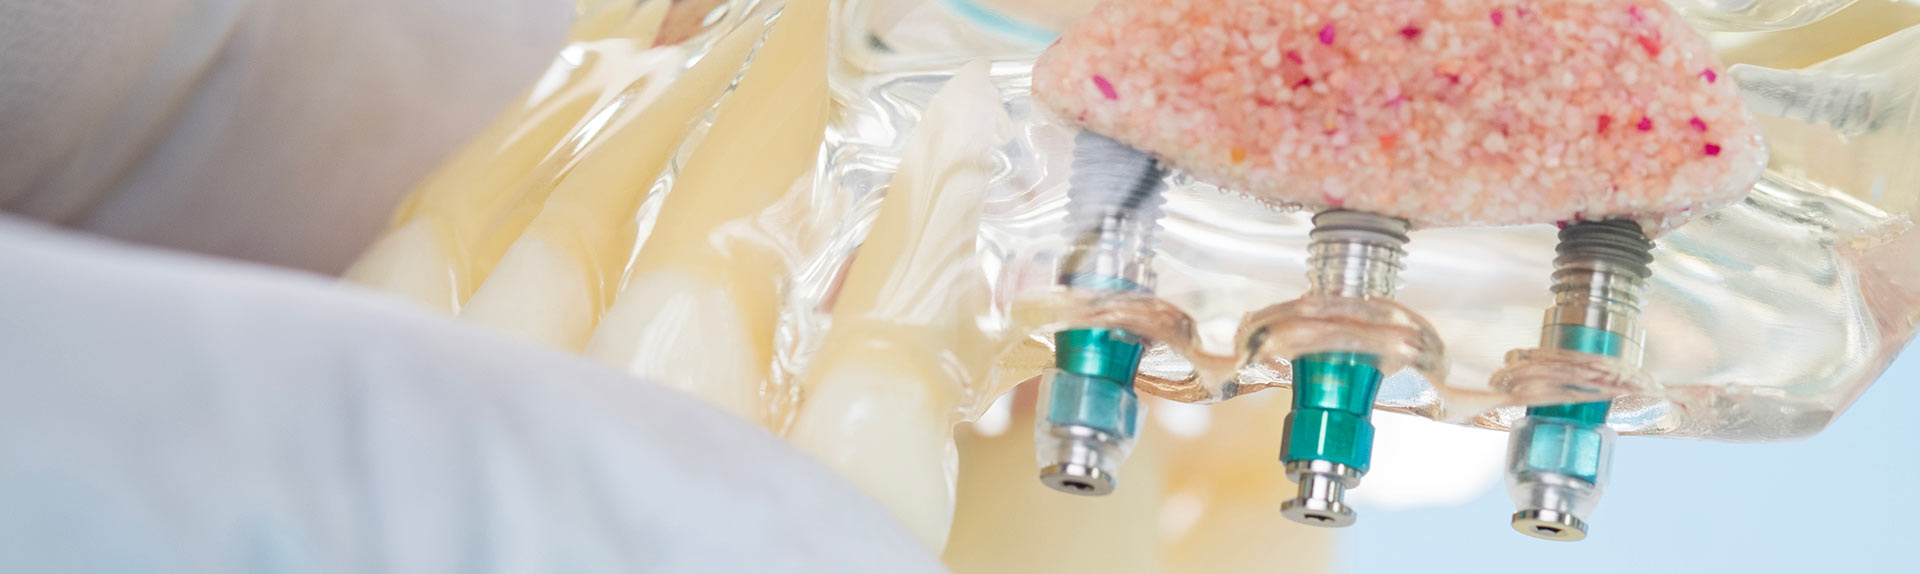 implantologia | Studi Odontoiatrici White Trento